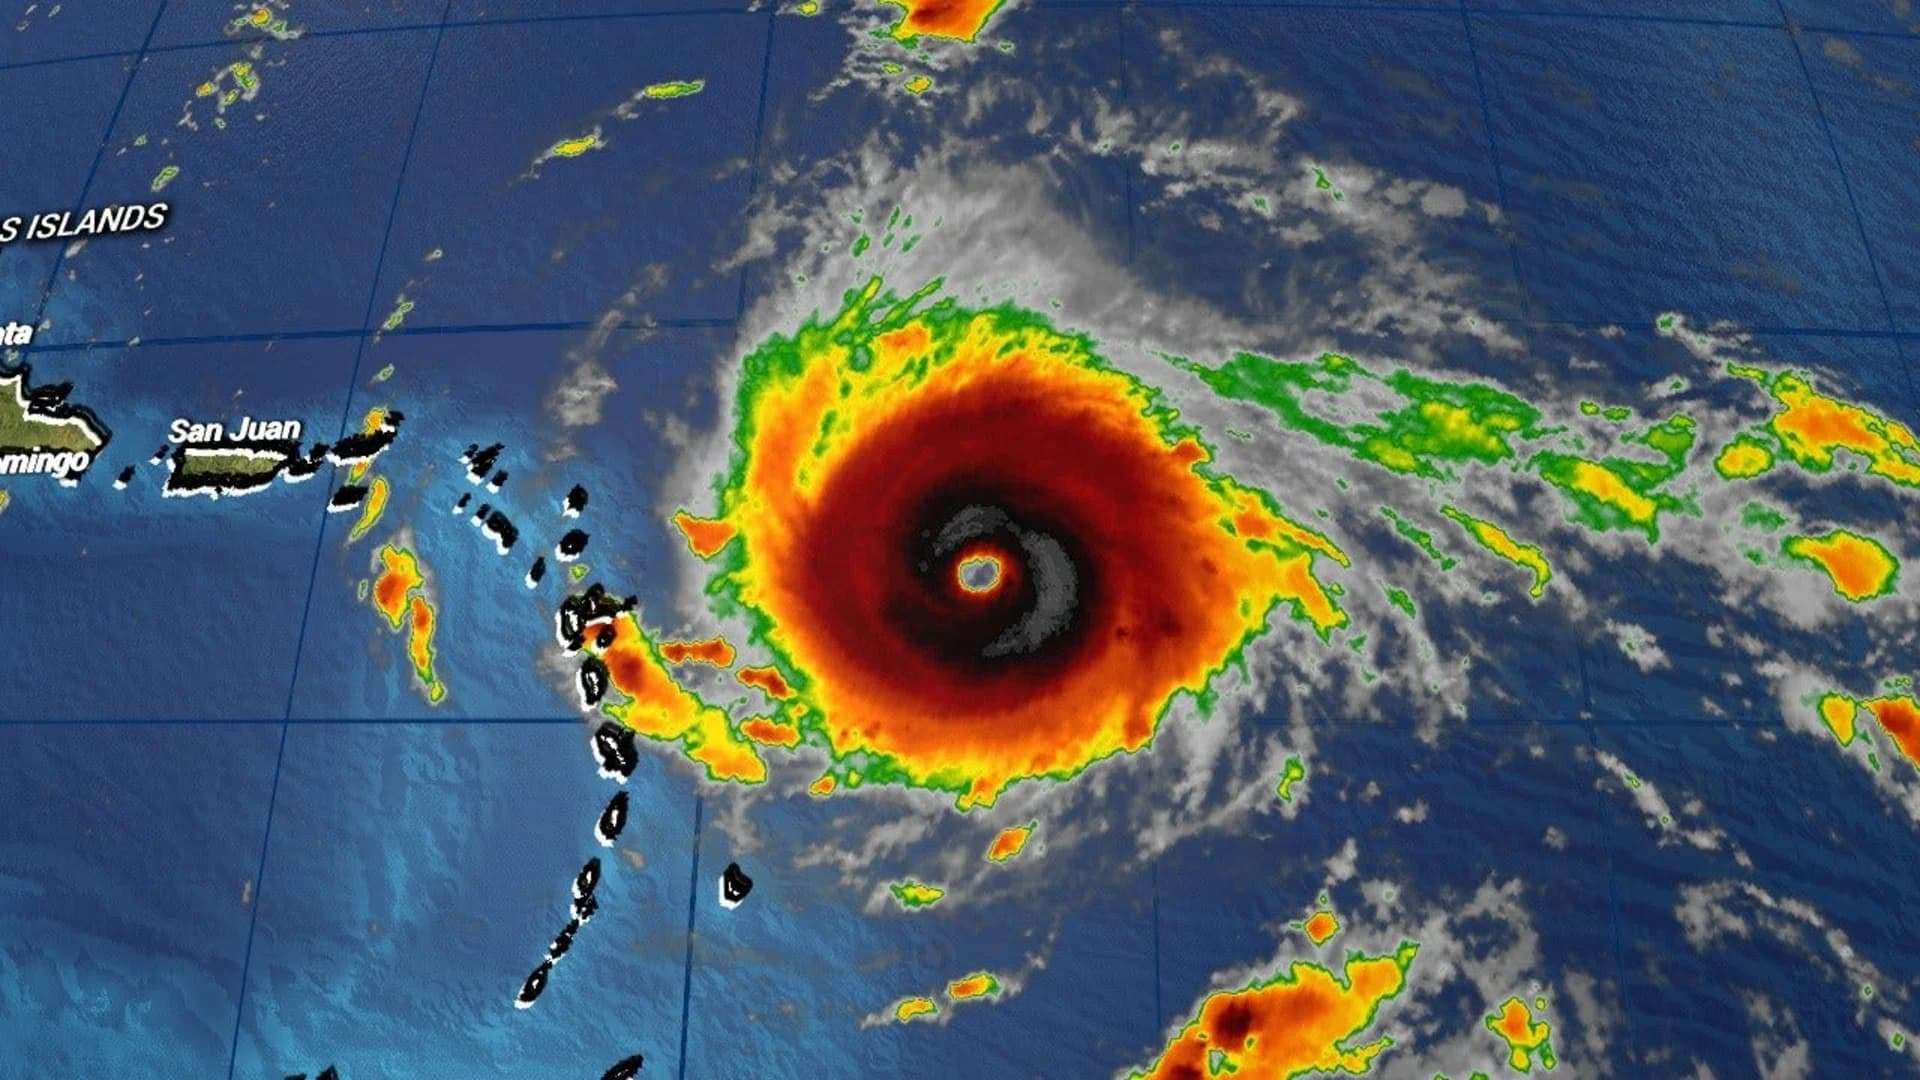 Irma strengthens into Category 5 hurricane, nears Caribbean